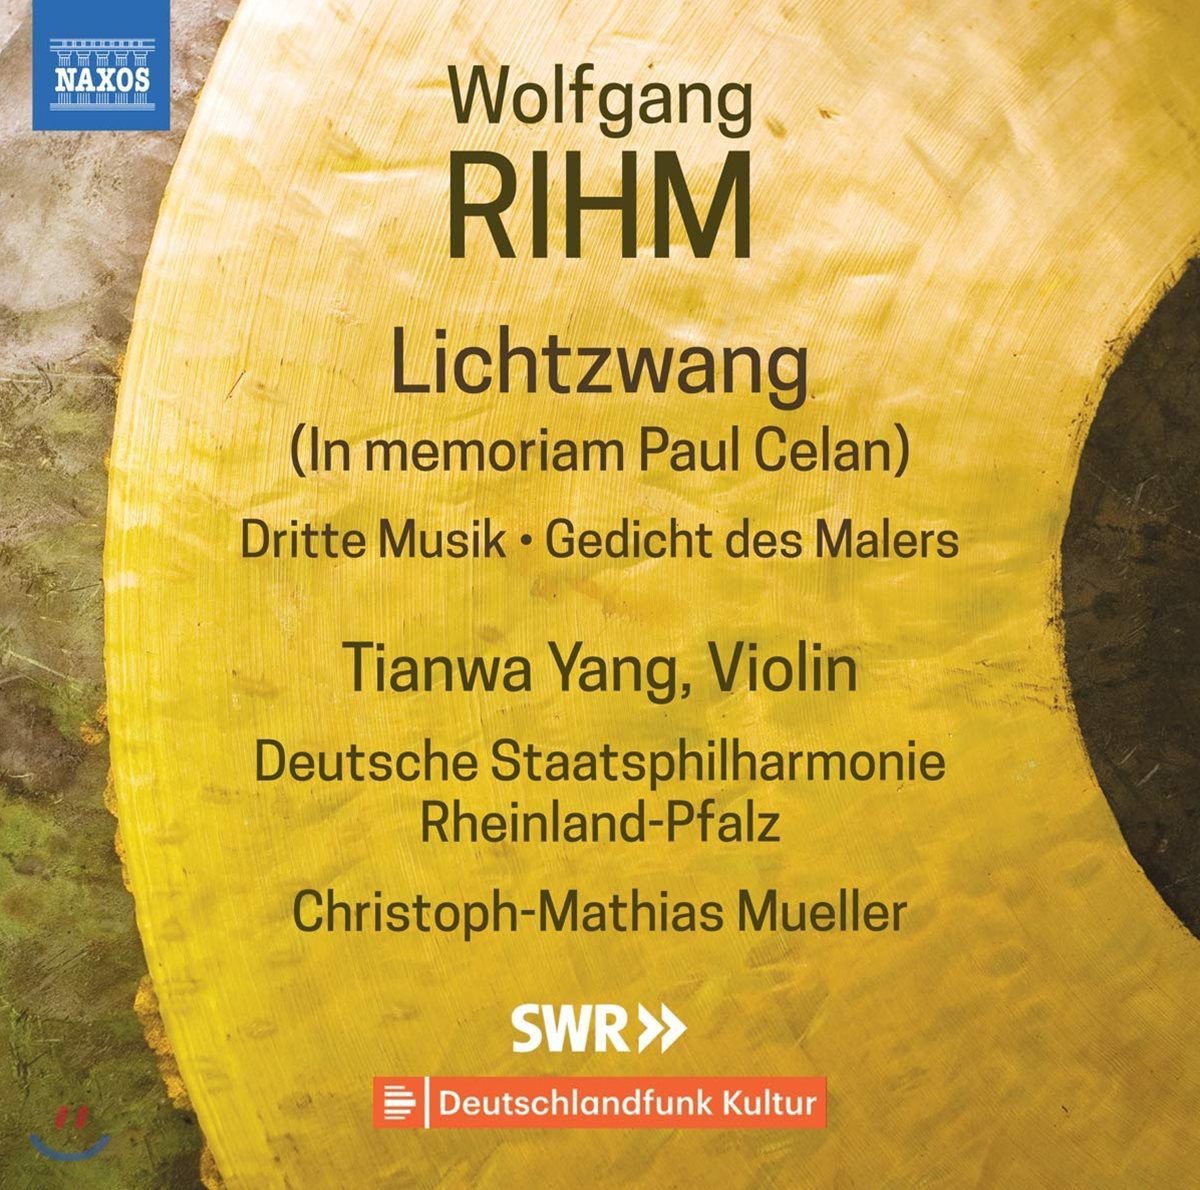 Tianwa Yang 볼프강 림: 바이올린과 오케스트라를 위한 작품 1집 (Wolfgang Rihm: Music for Violin and Orchestra Vol. 1)